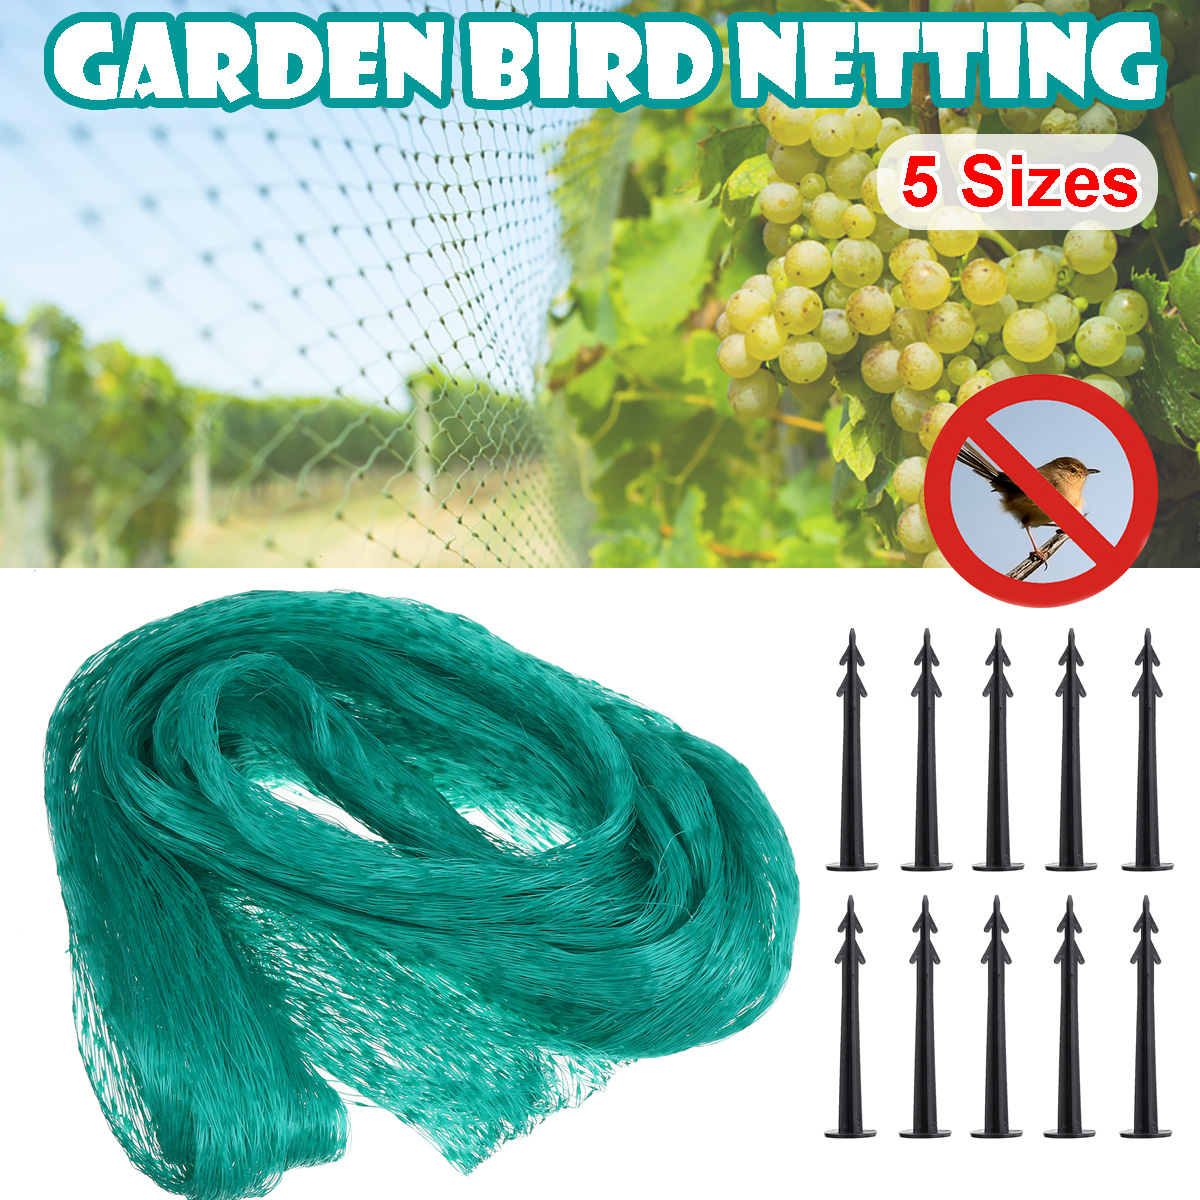 5-Size-Anti-Bird-Net-Garden-Mesh-Fruit-Tree-Pond-Netting-Protect-Cover-1710820-1